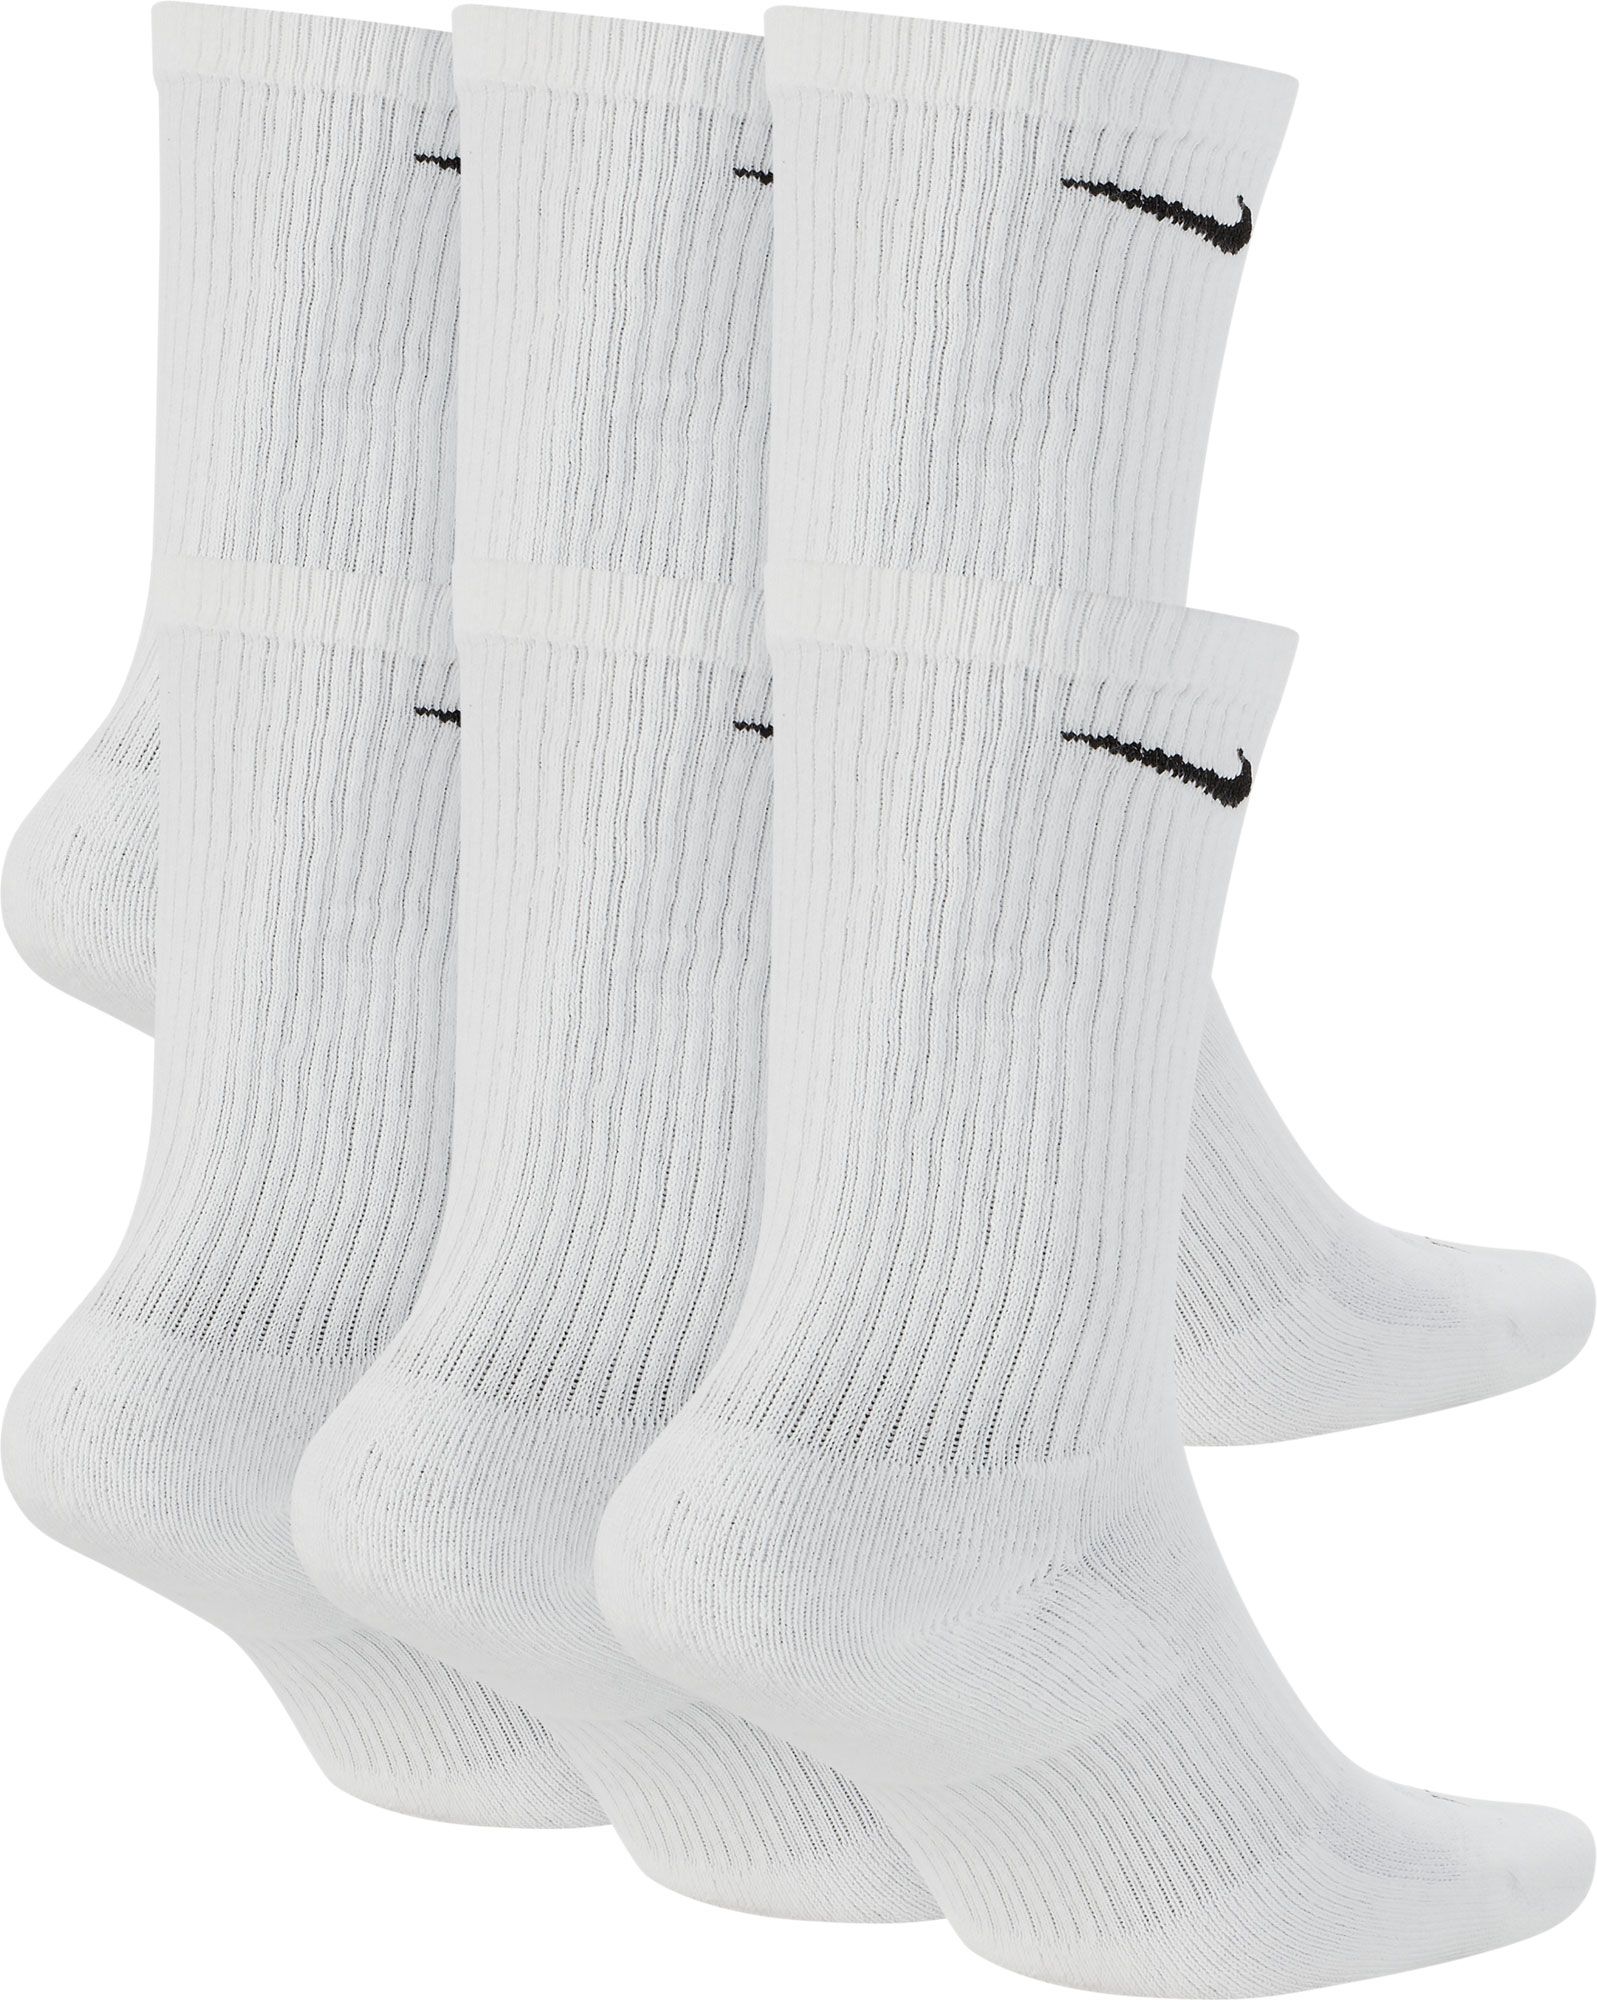 nike training crew socks white